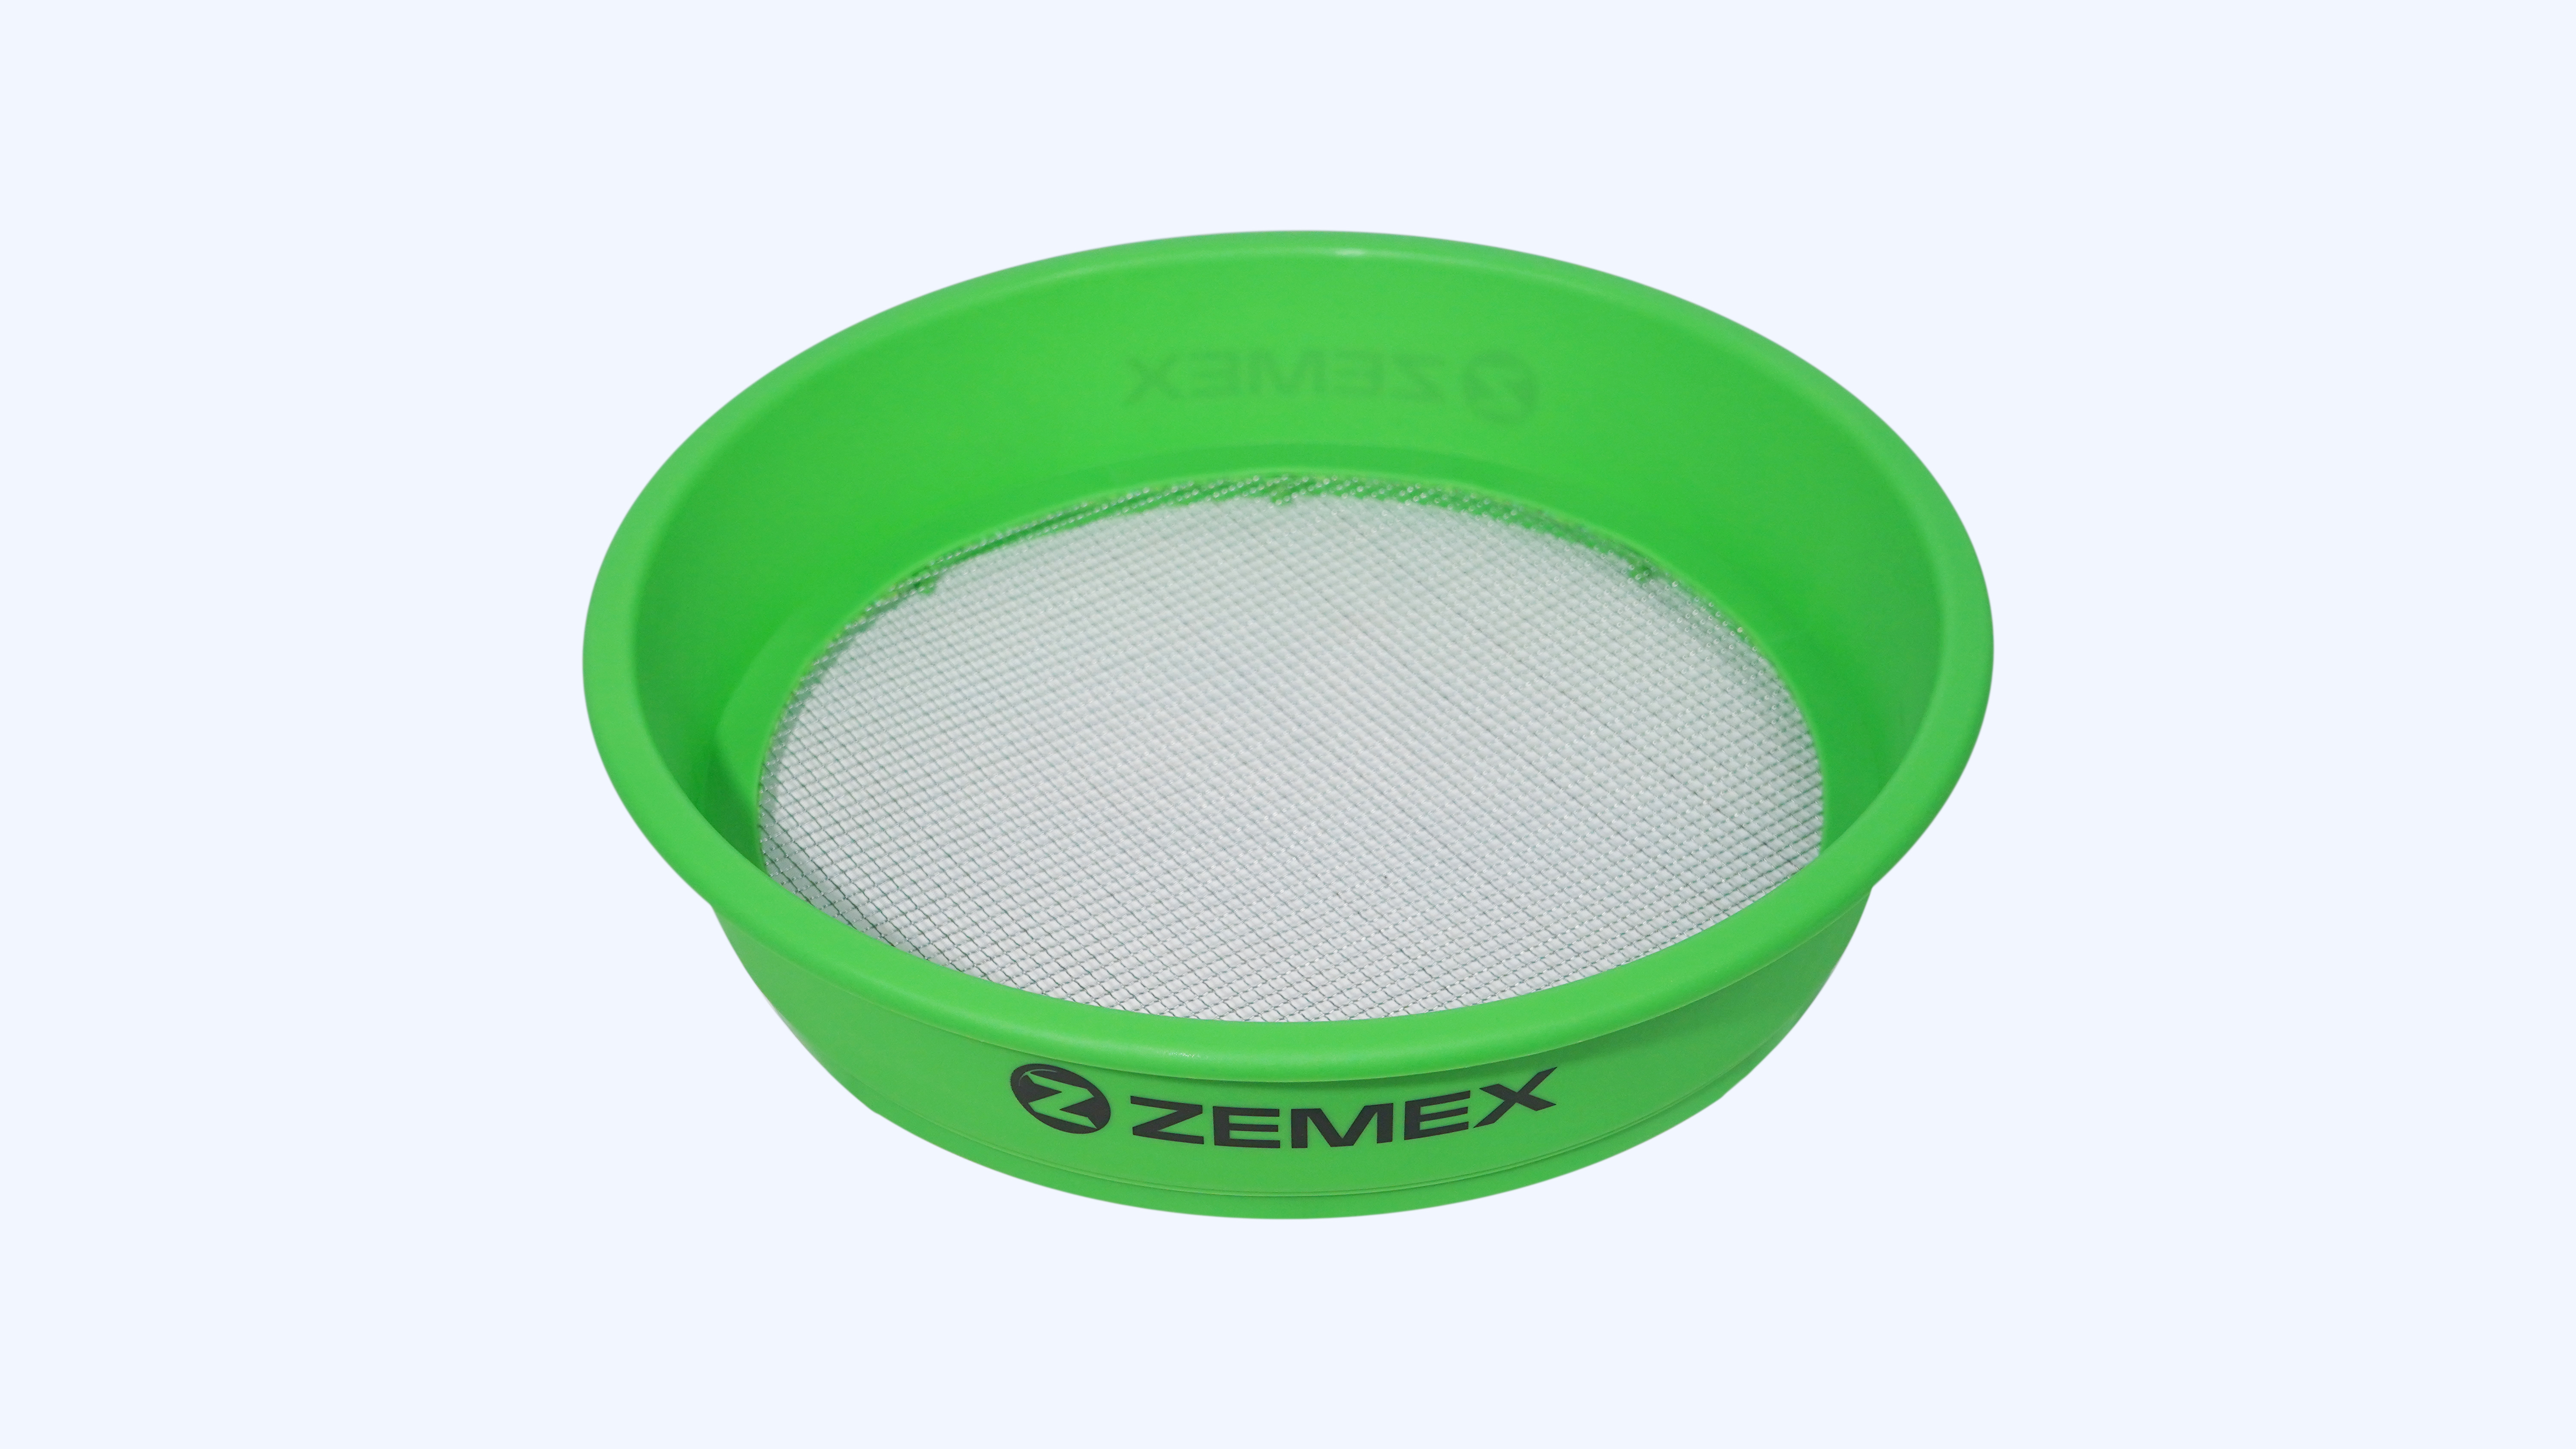 Сито для прикормки. Сито Zemex металлическое, d 36 см, для ведра 25 л, ячейка 3 мм, цвет зелёный. Сито для прикормки 3 мм. Сито рыболовное 2 мм. Ведро крышка сито таз Zemex.